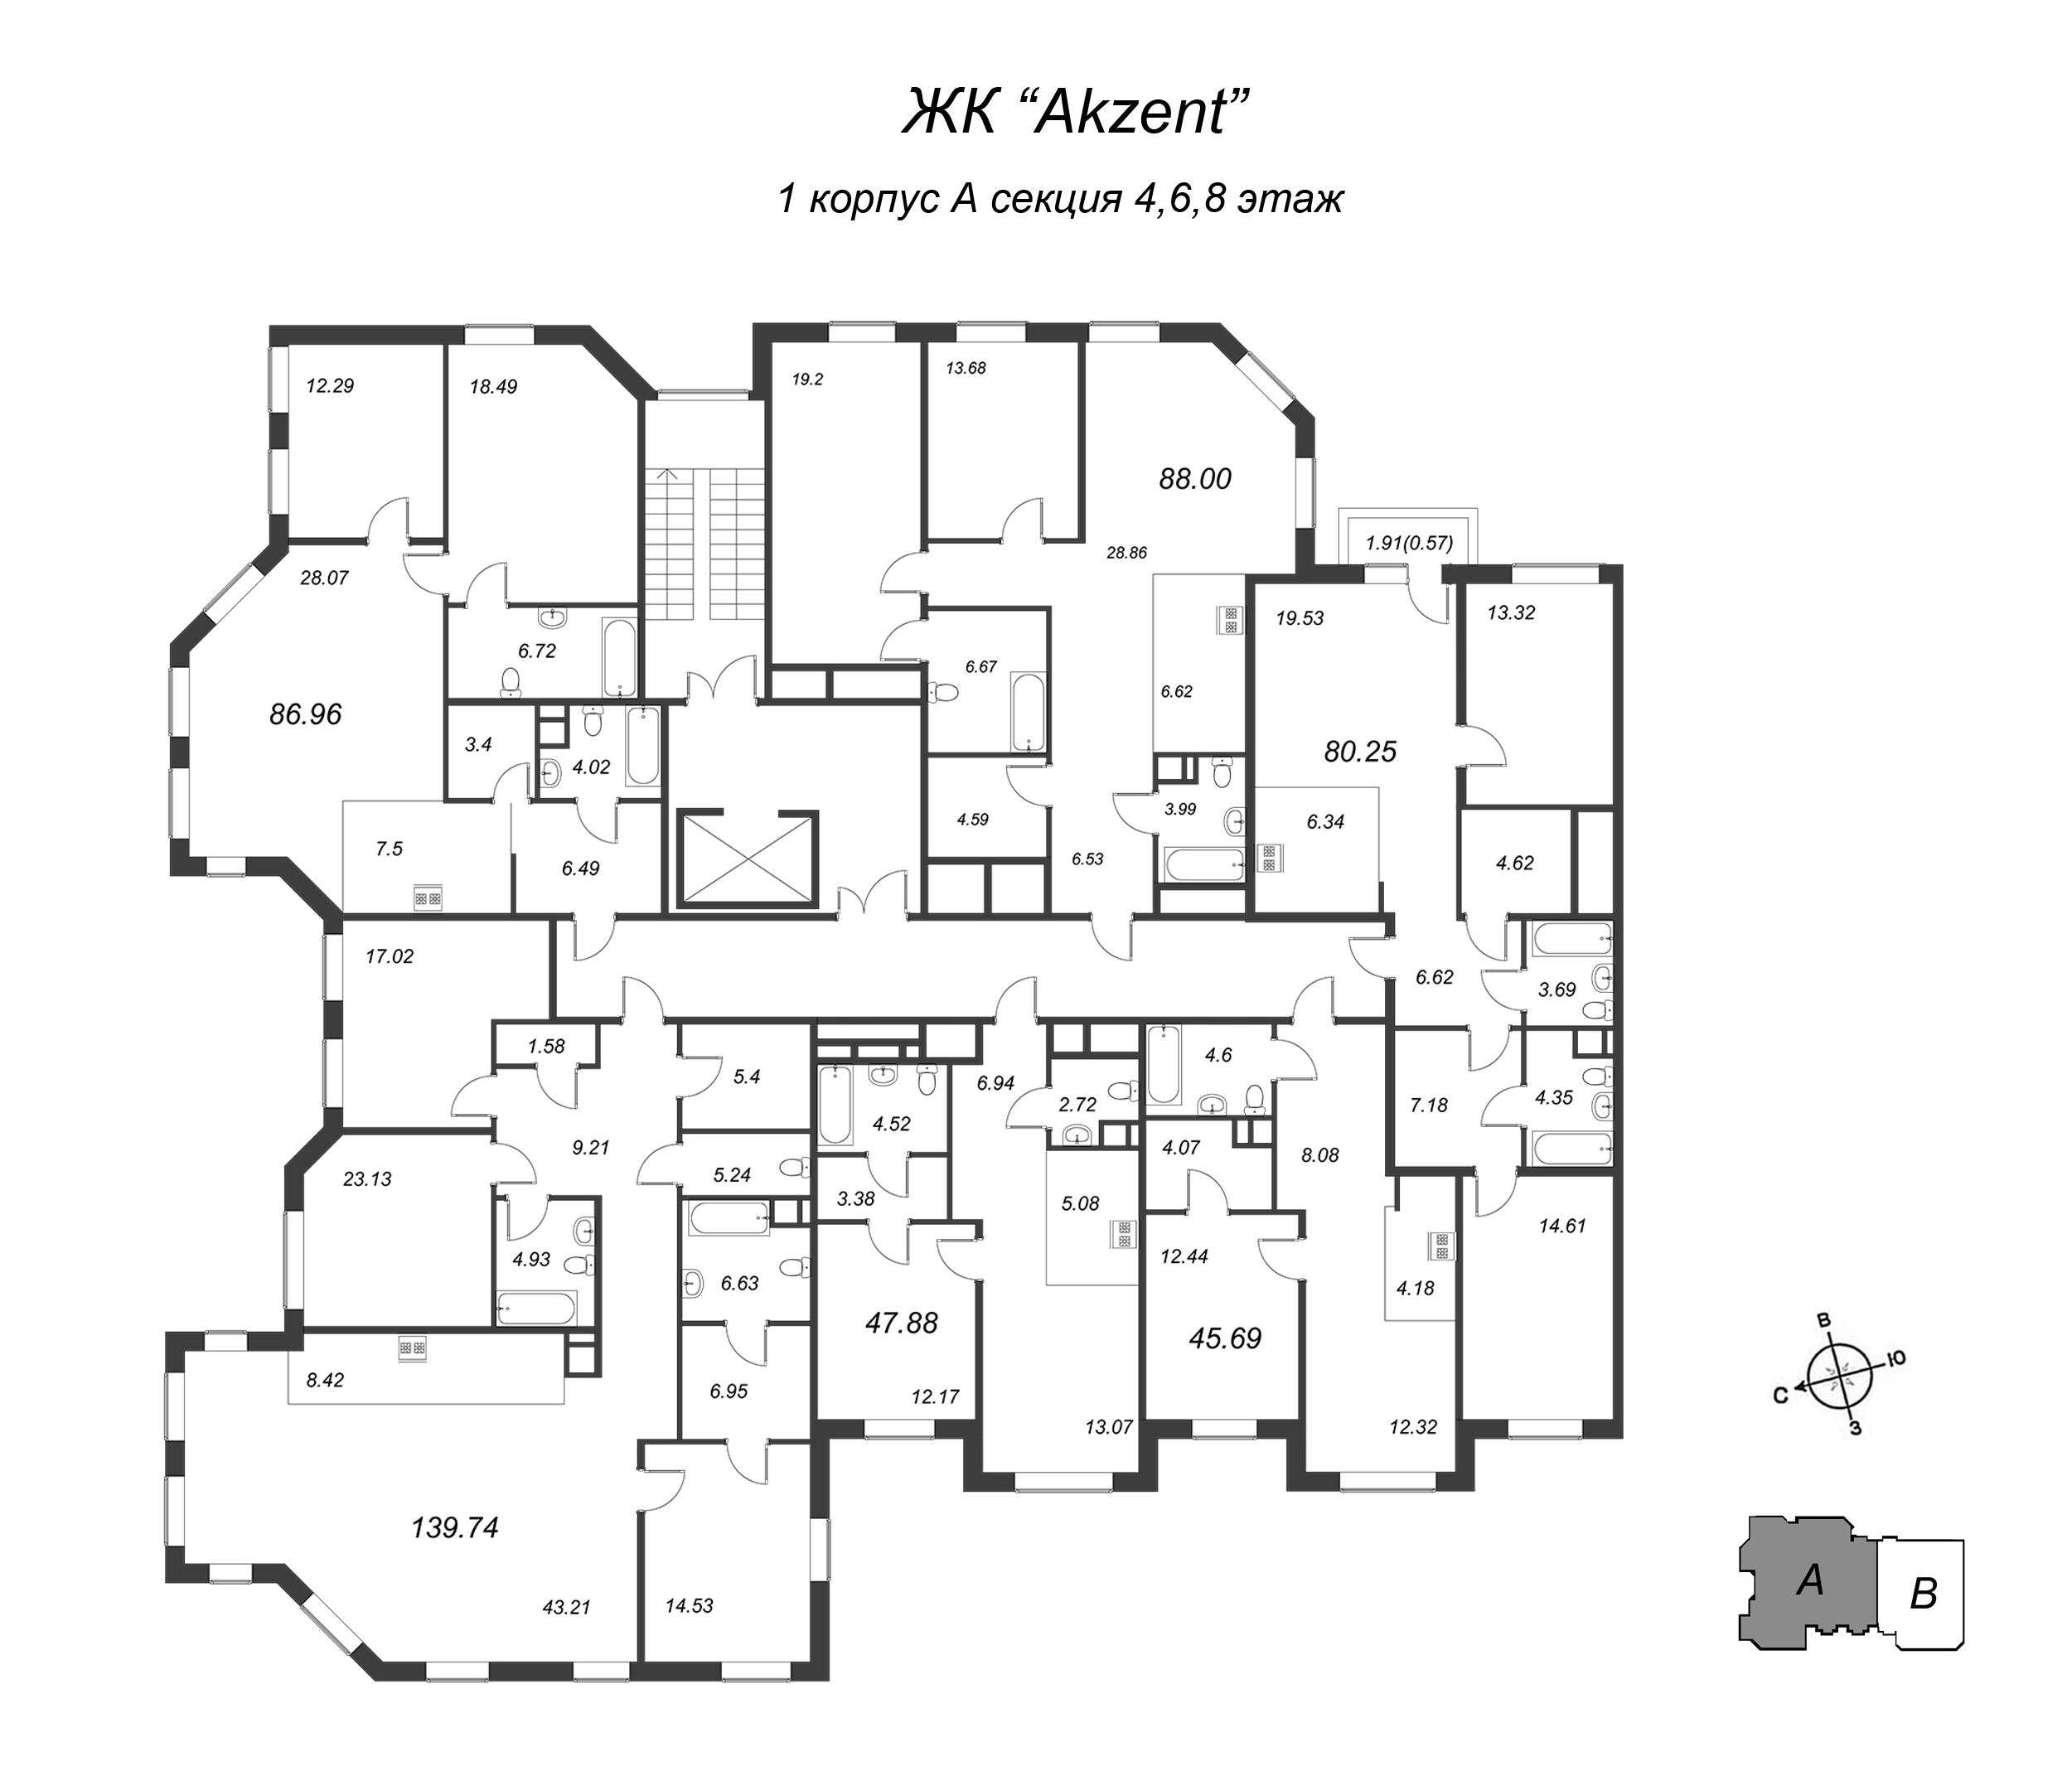 2-комнатная (Евро) квартира, 48.16 м² в ЖК "Akzent" - планировка этажа